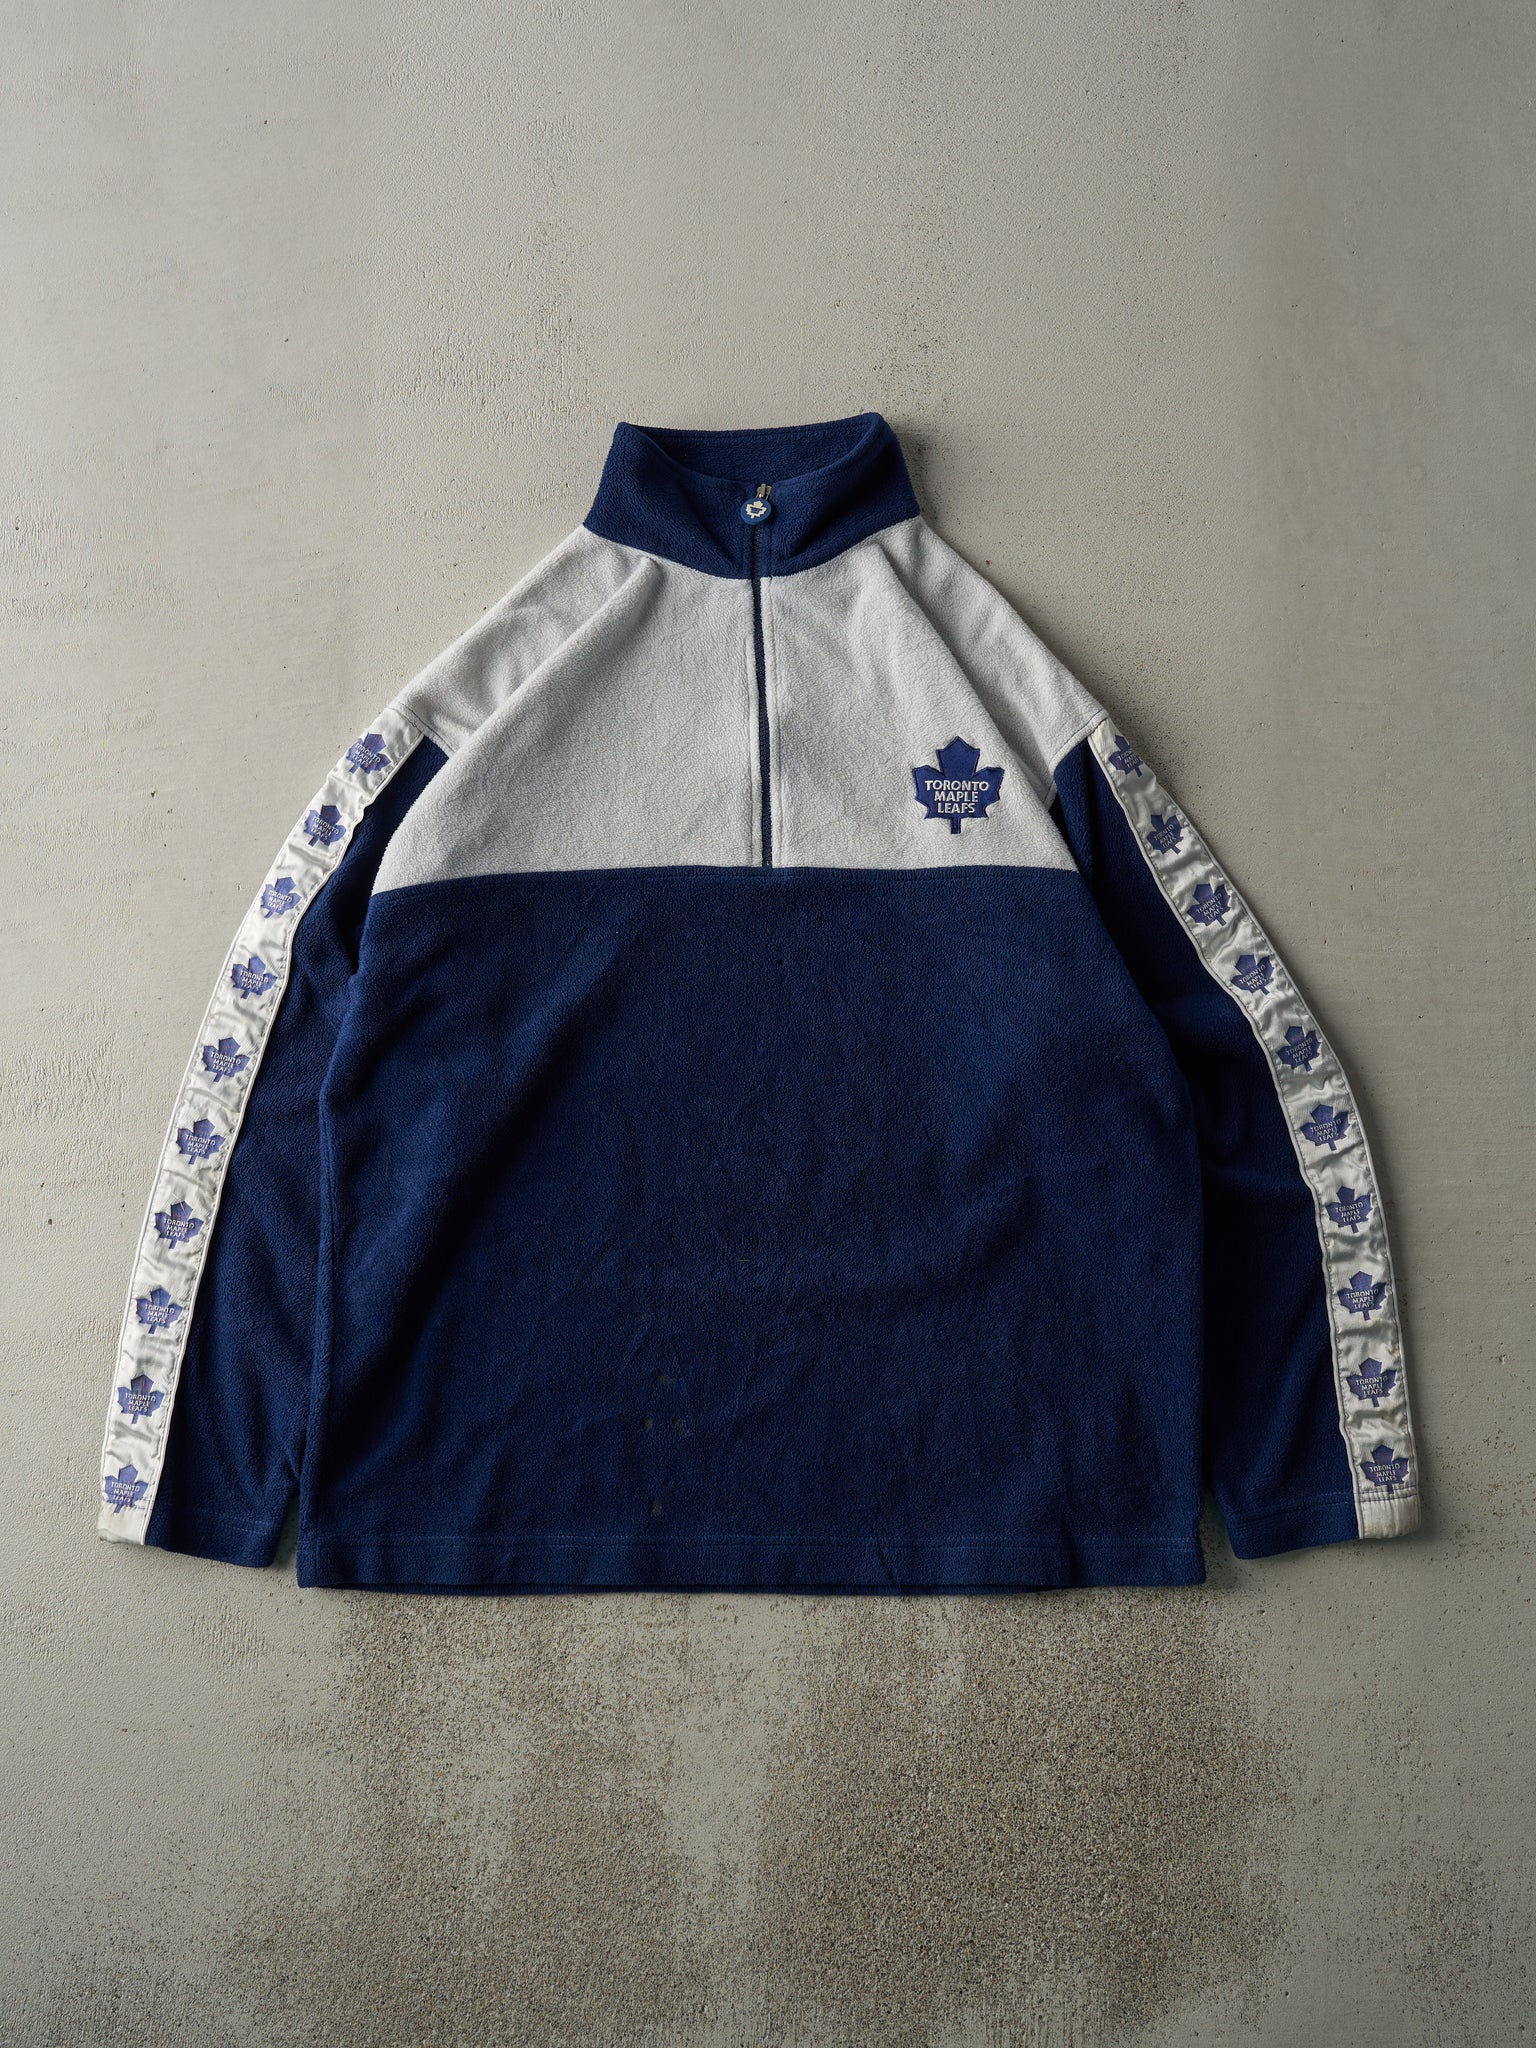 Vintage 90s Navy Blue & White Embroidered Toronto Maple Leafs Quarter Zip Fleece Sweater (L)